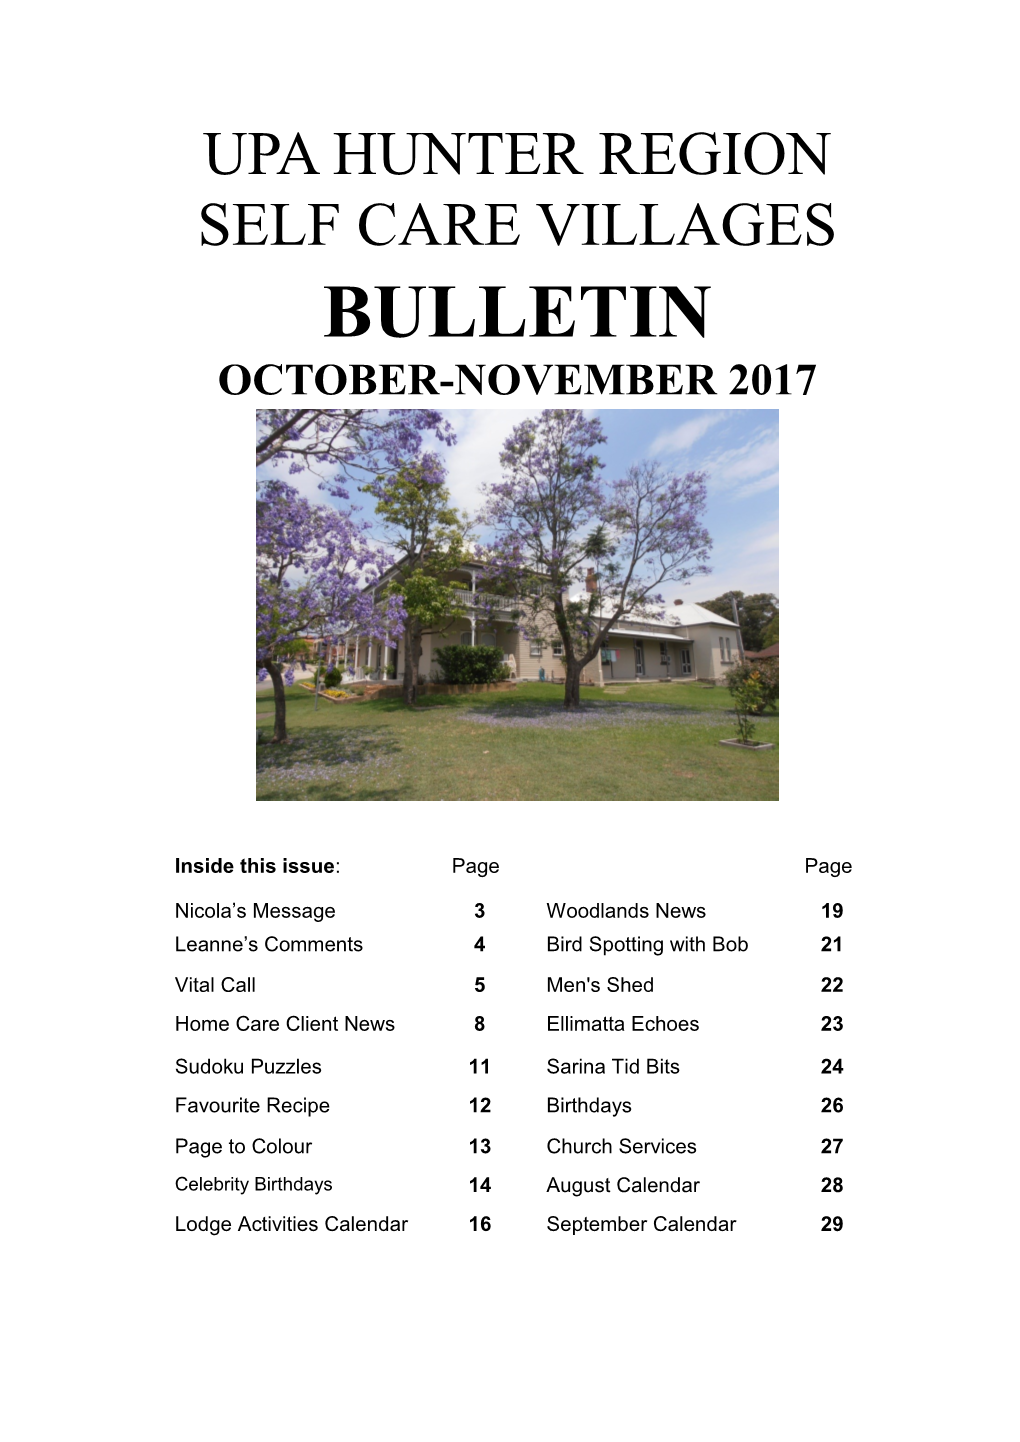 Bulletin October-November 2017